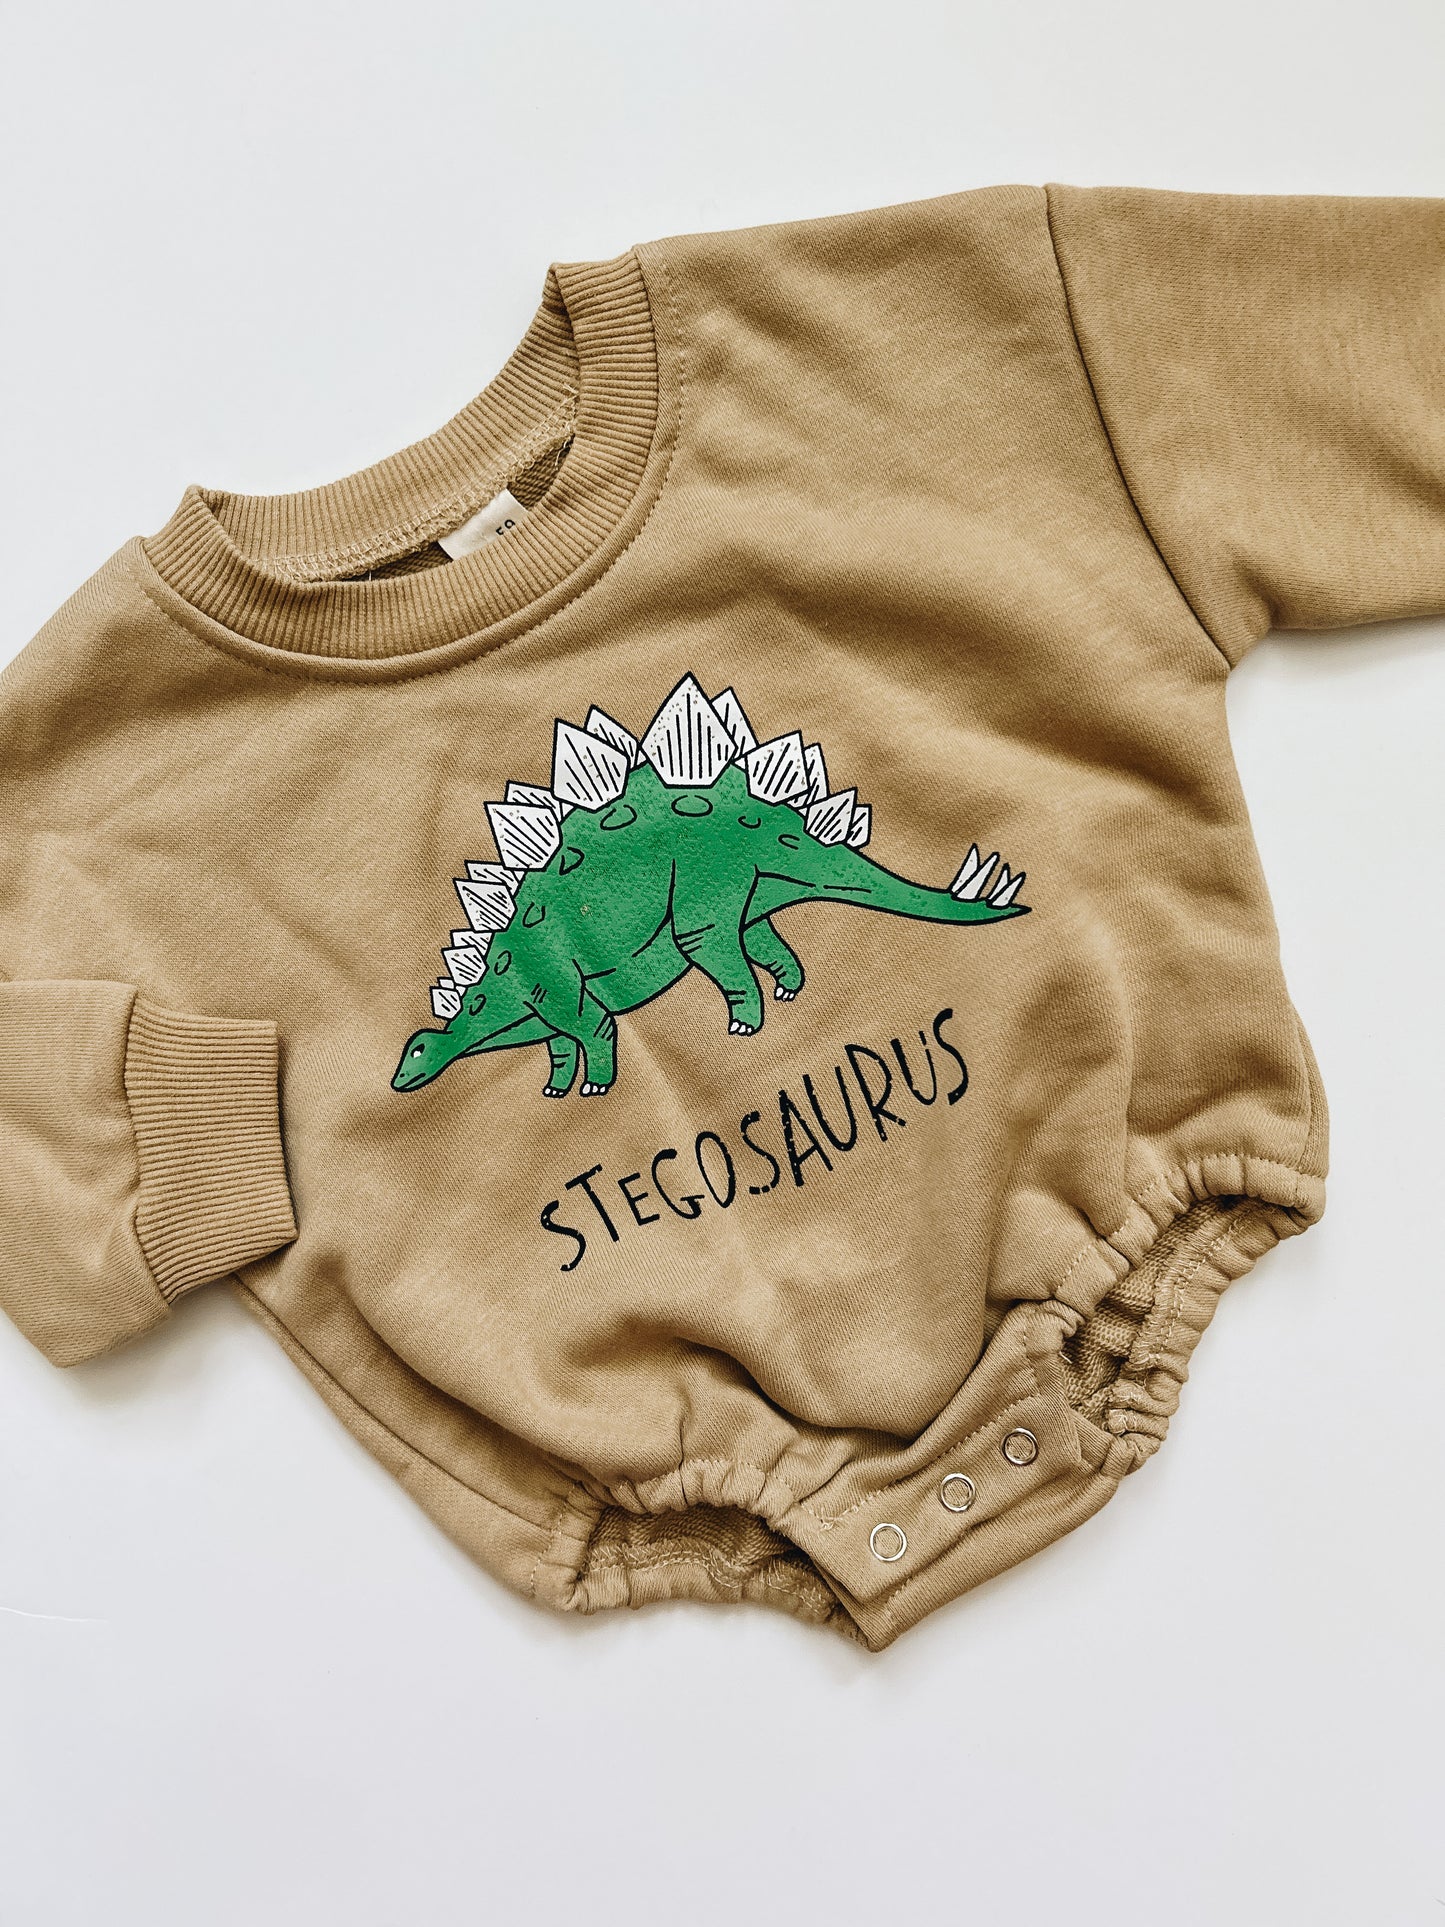 Stegosaurus Sweatshirt Romper